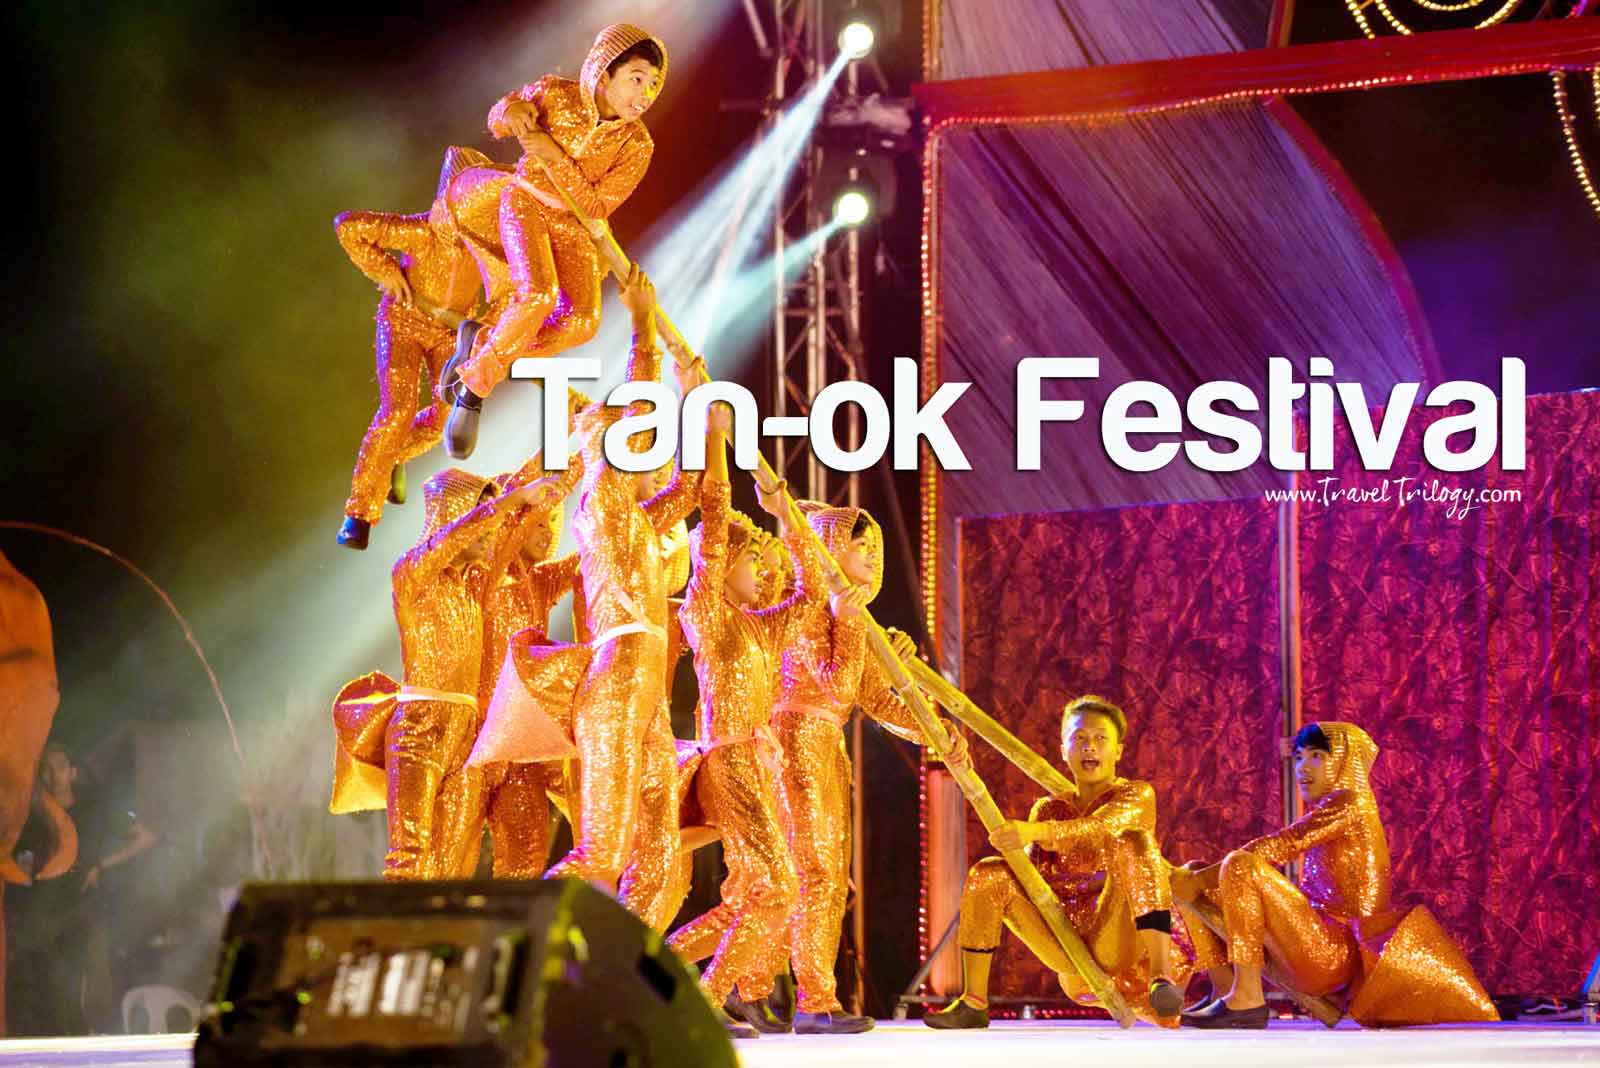 tan-ok festival ilocos norte